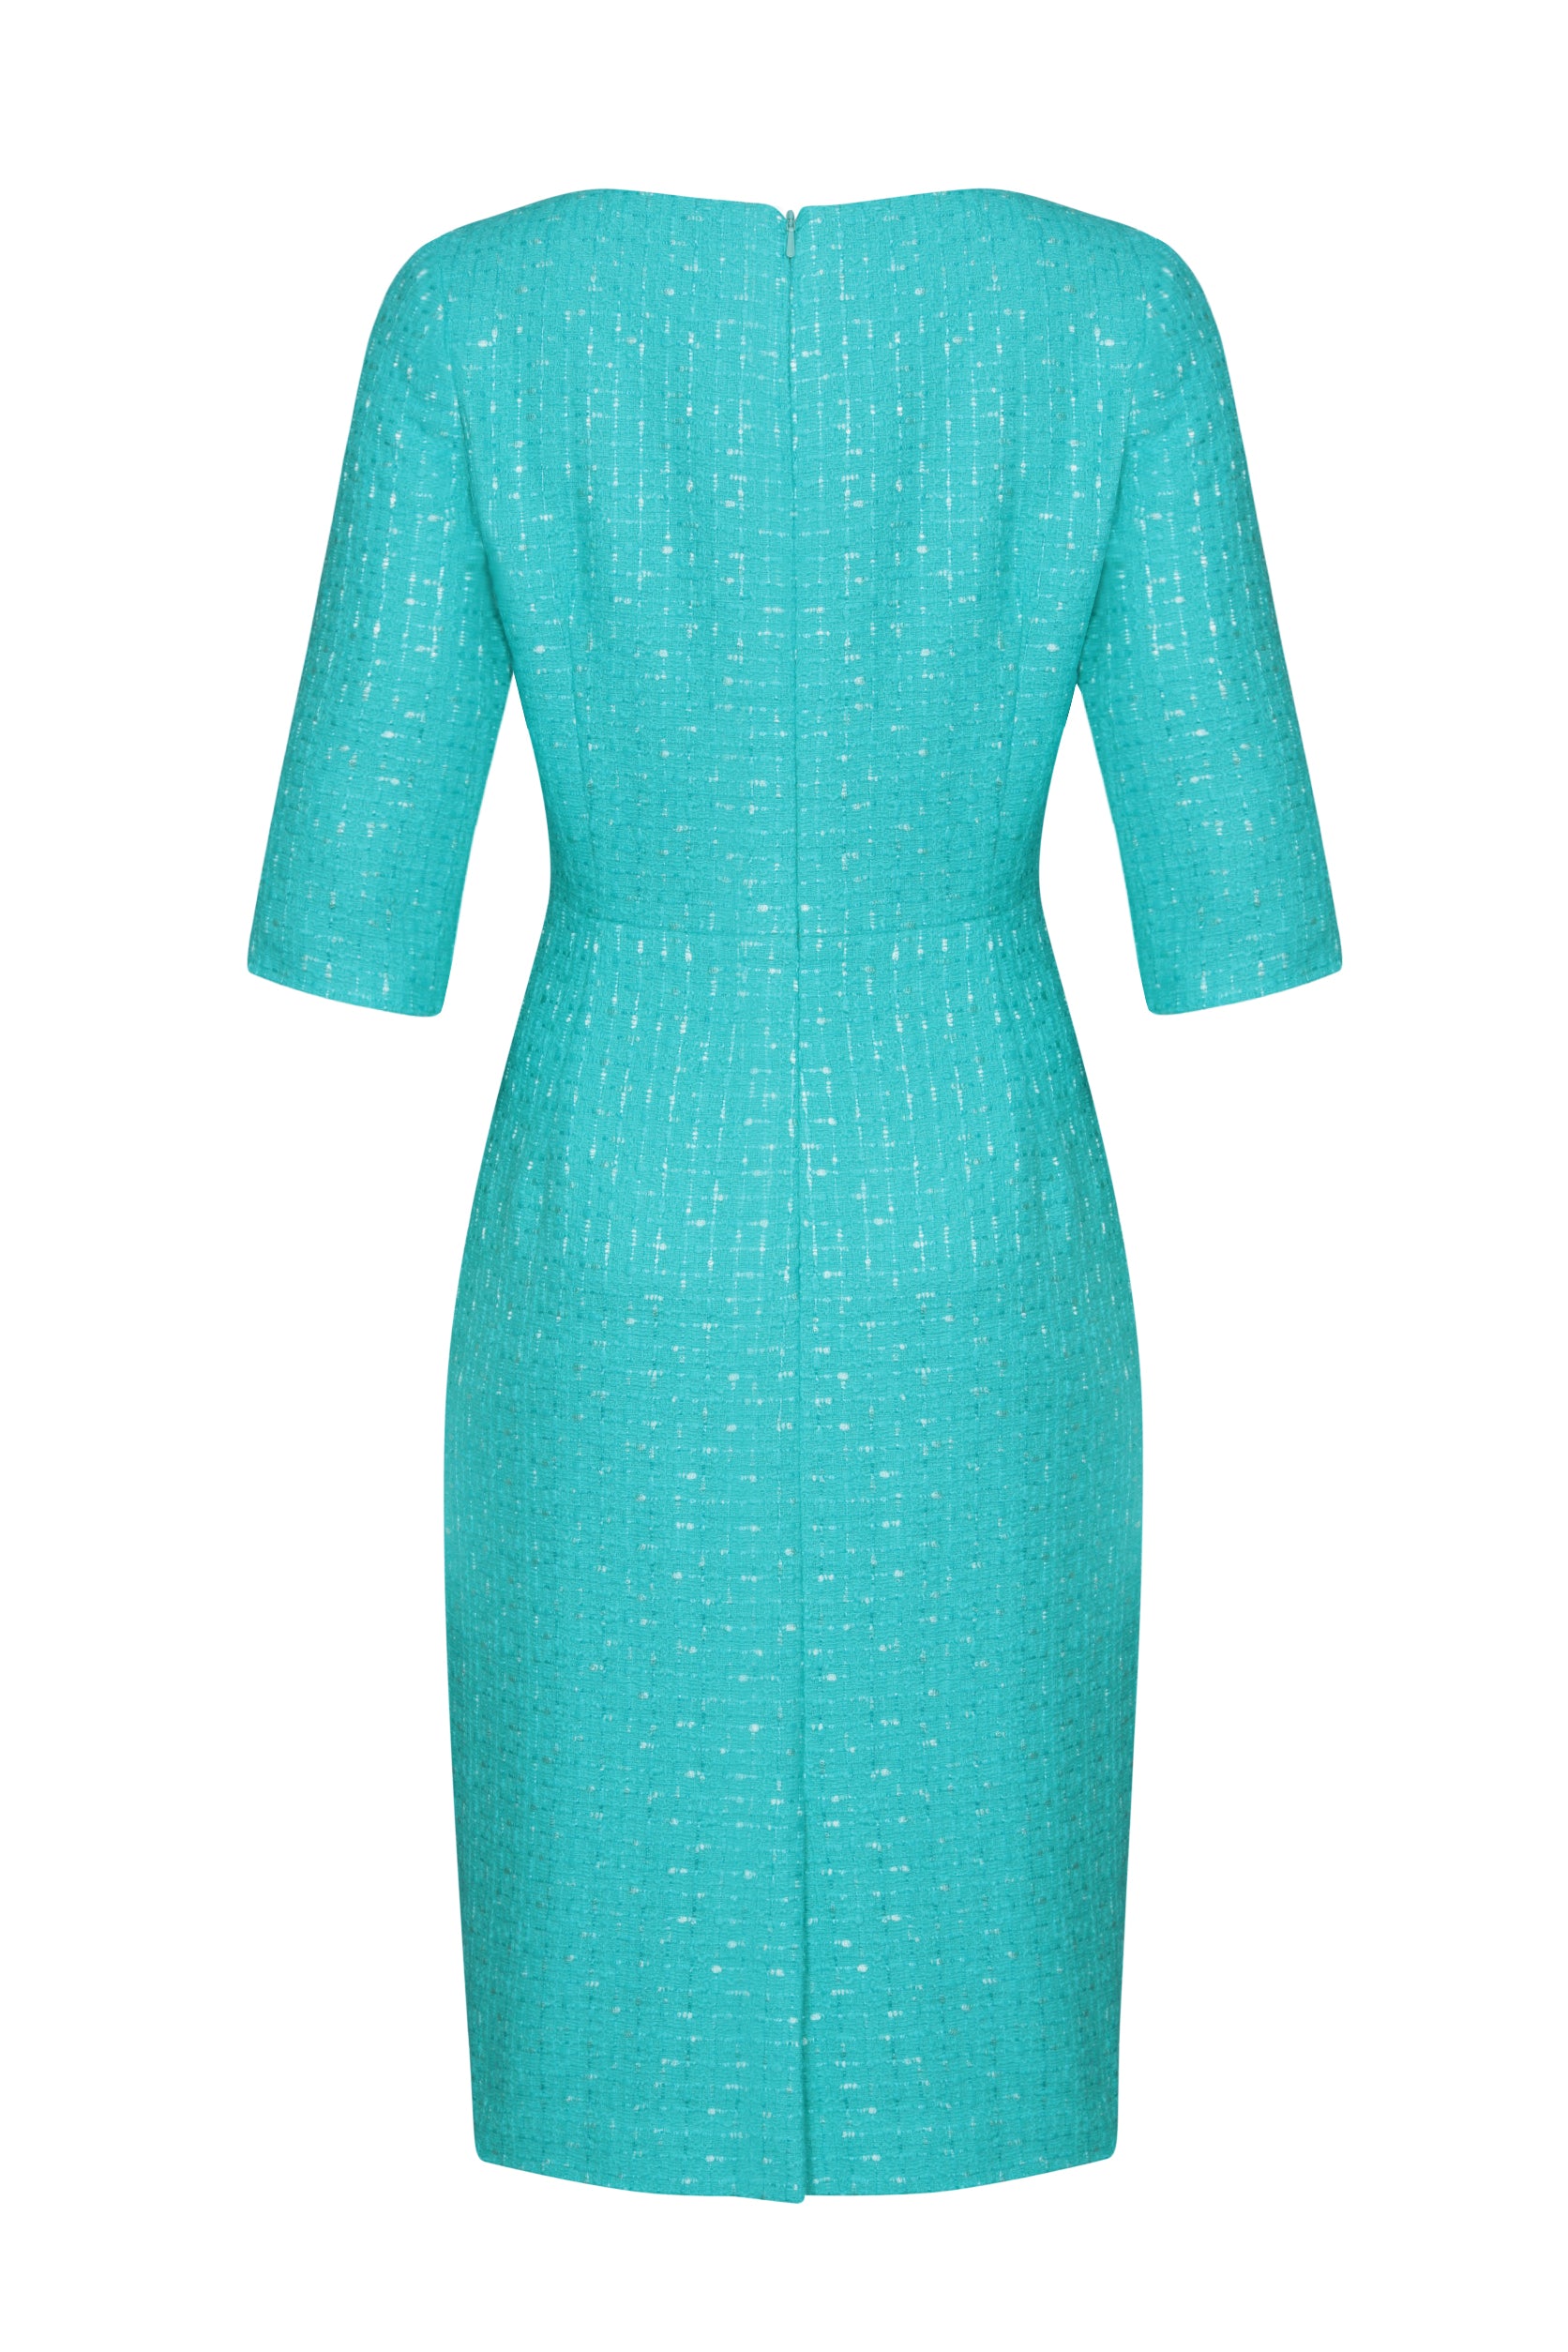 3/4 Sleeve Turquoise Plain Tweed Dress - Angela